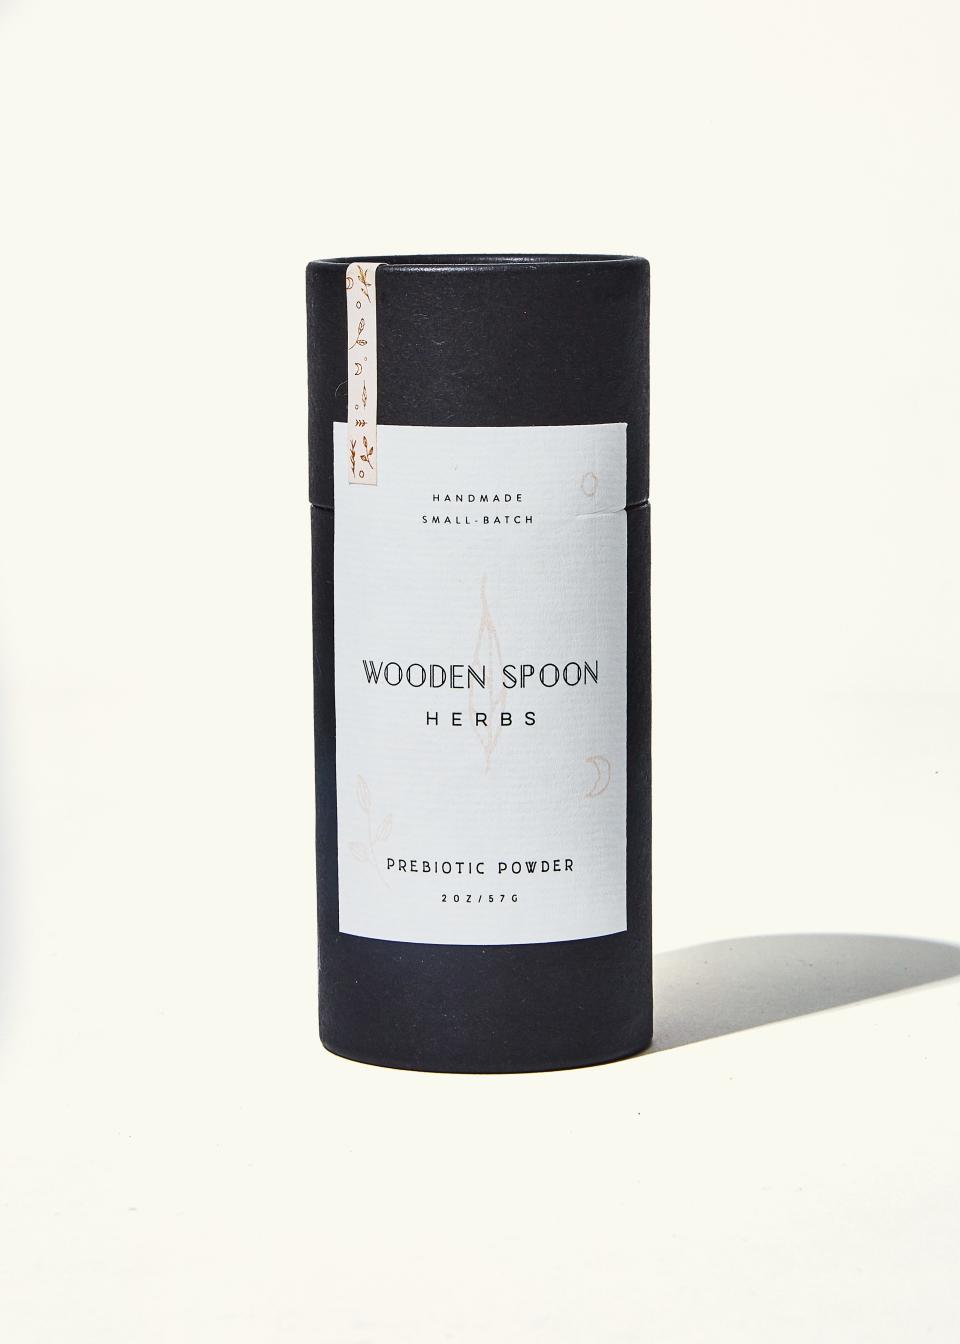 Wooden Spoon's prebiotic powder uses herbs like burdock and elecampane.